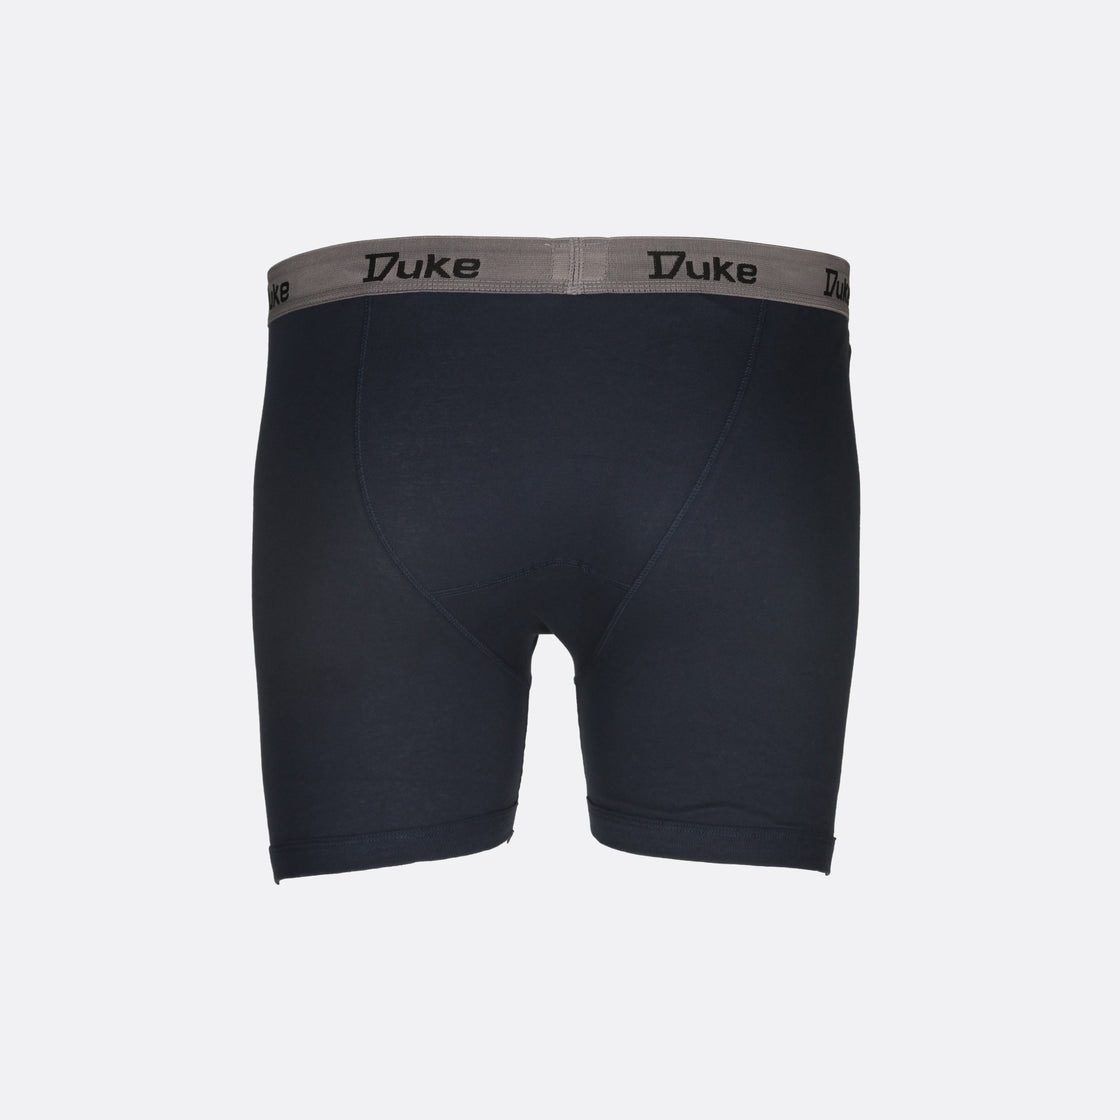 Duke Boxer Shorts